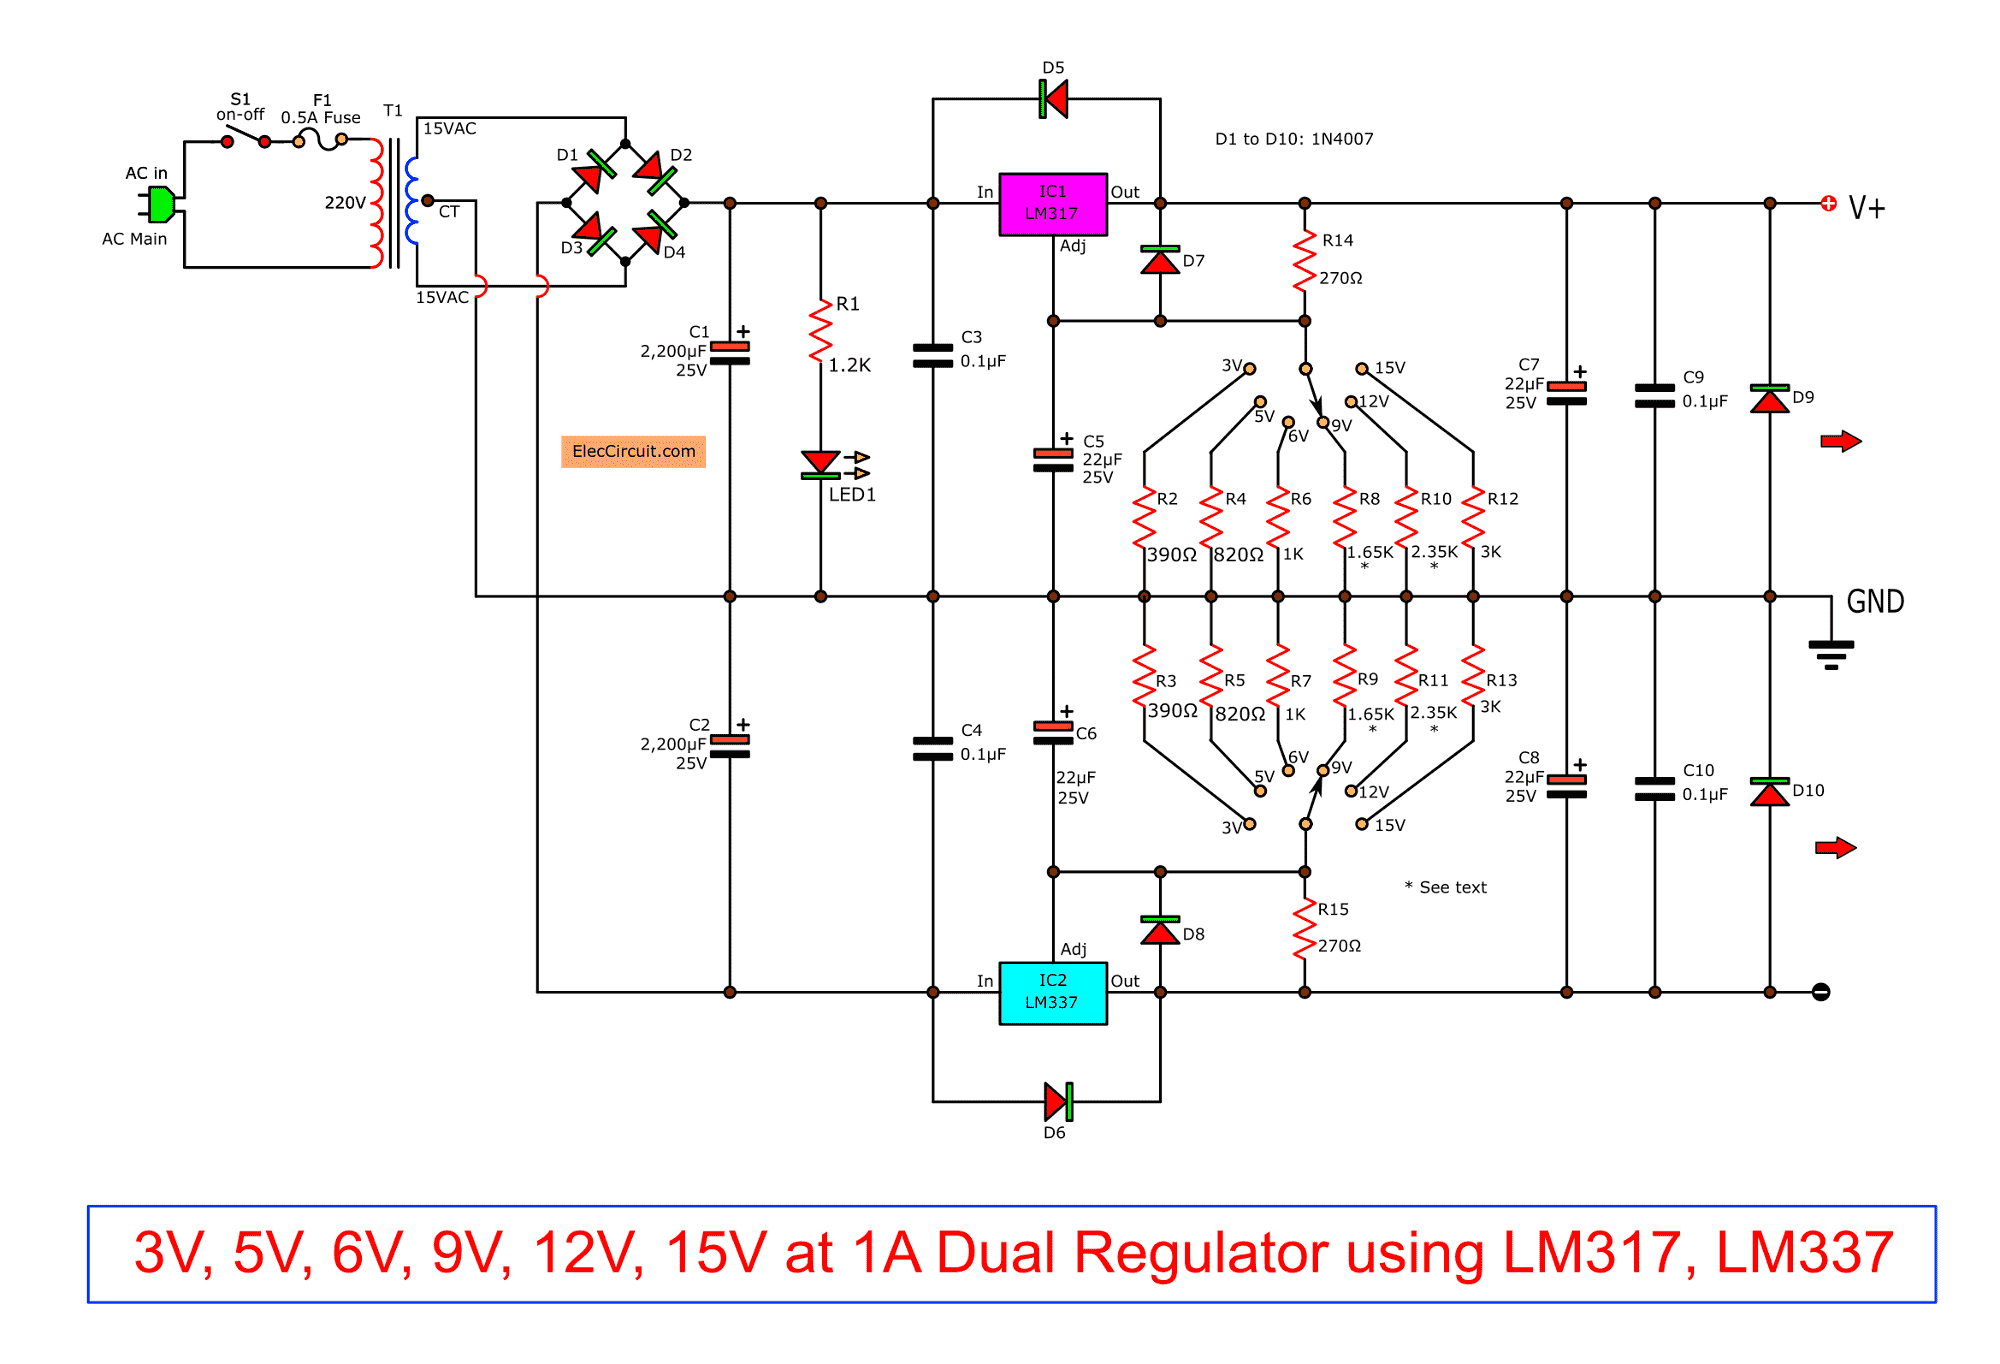 Dual power supply circuit 3V,5V,6V,9V,12,15V LM317,LM337